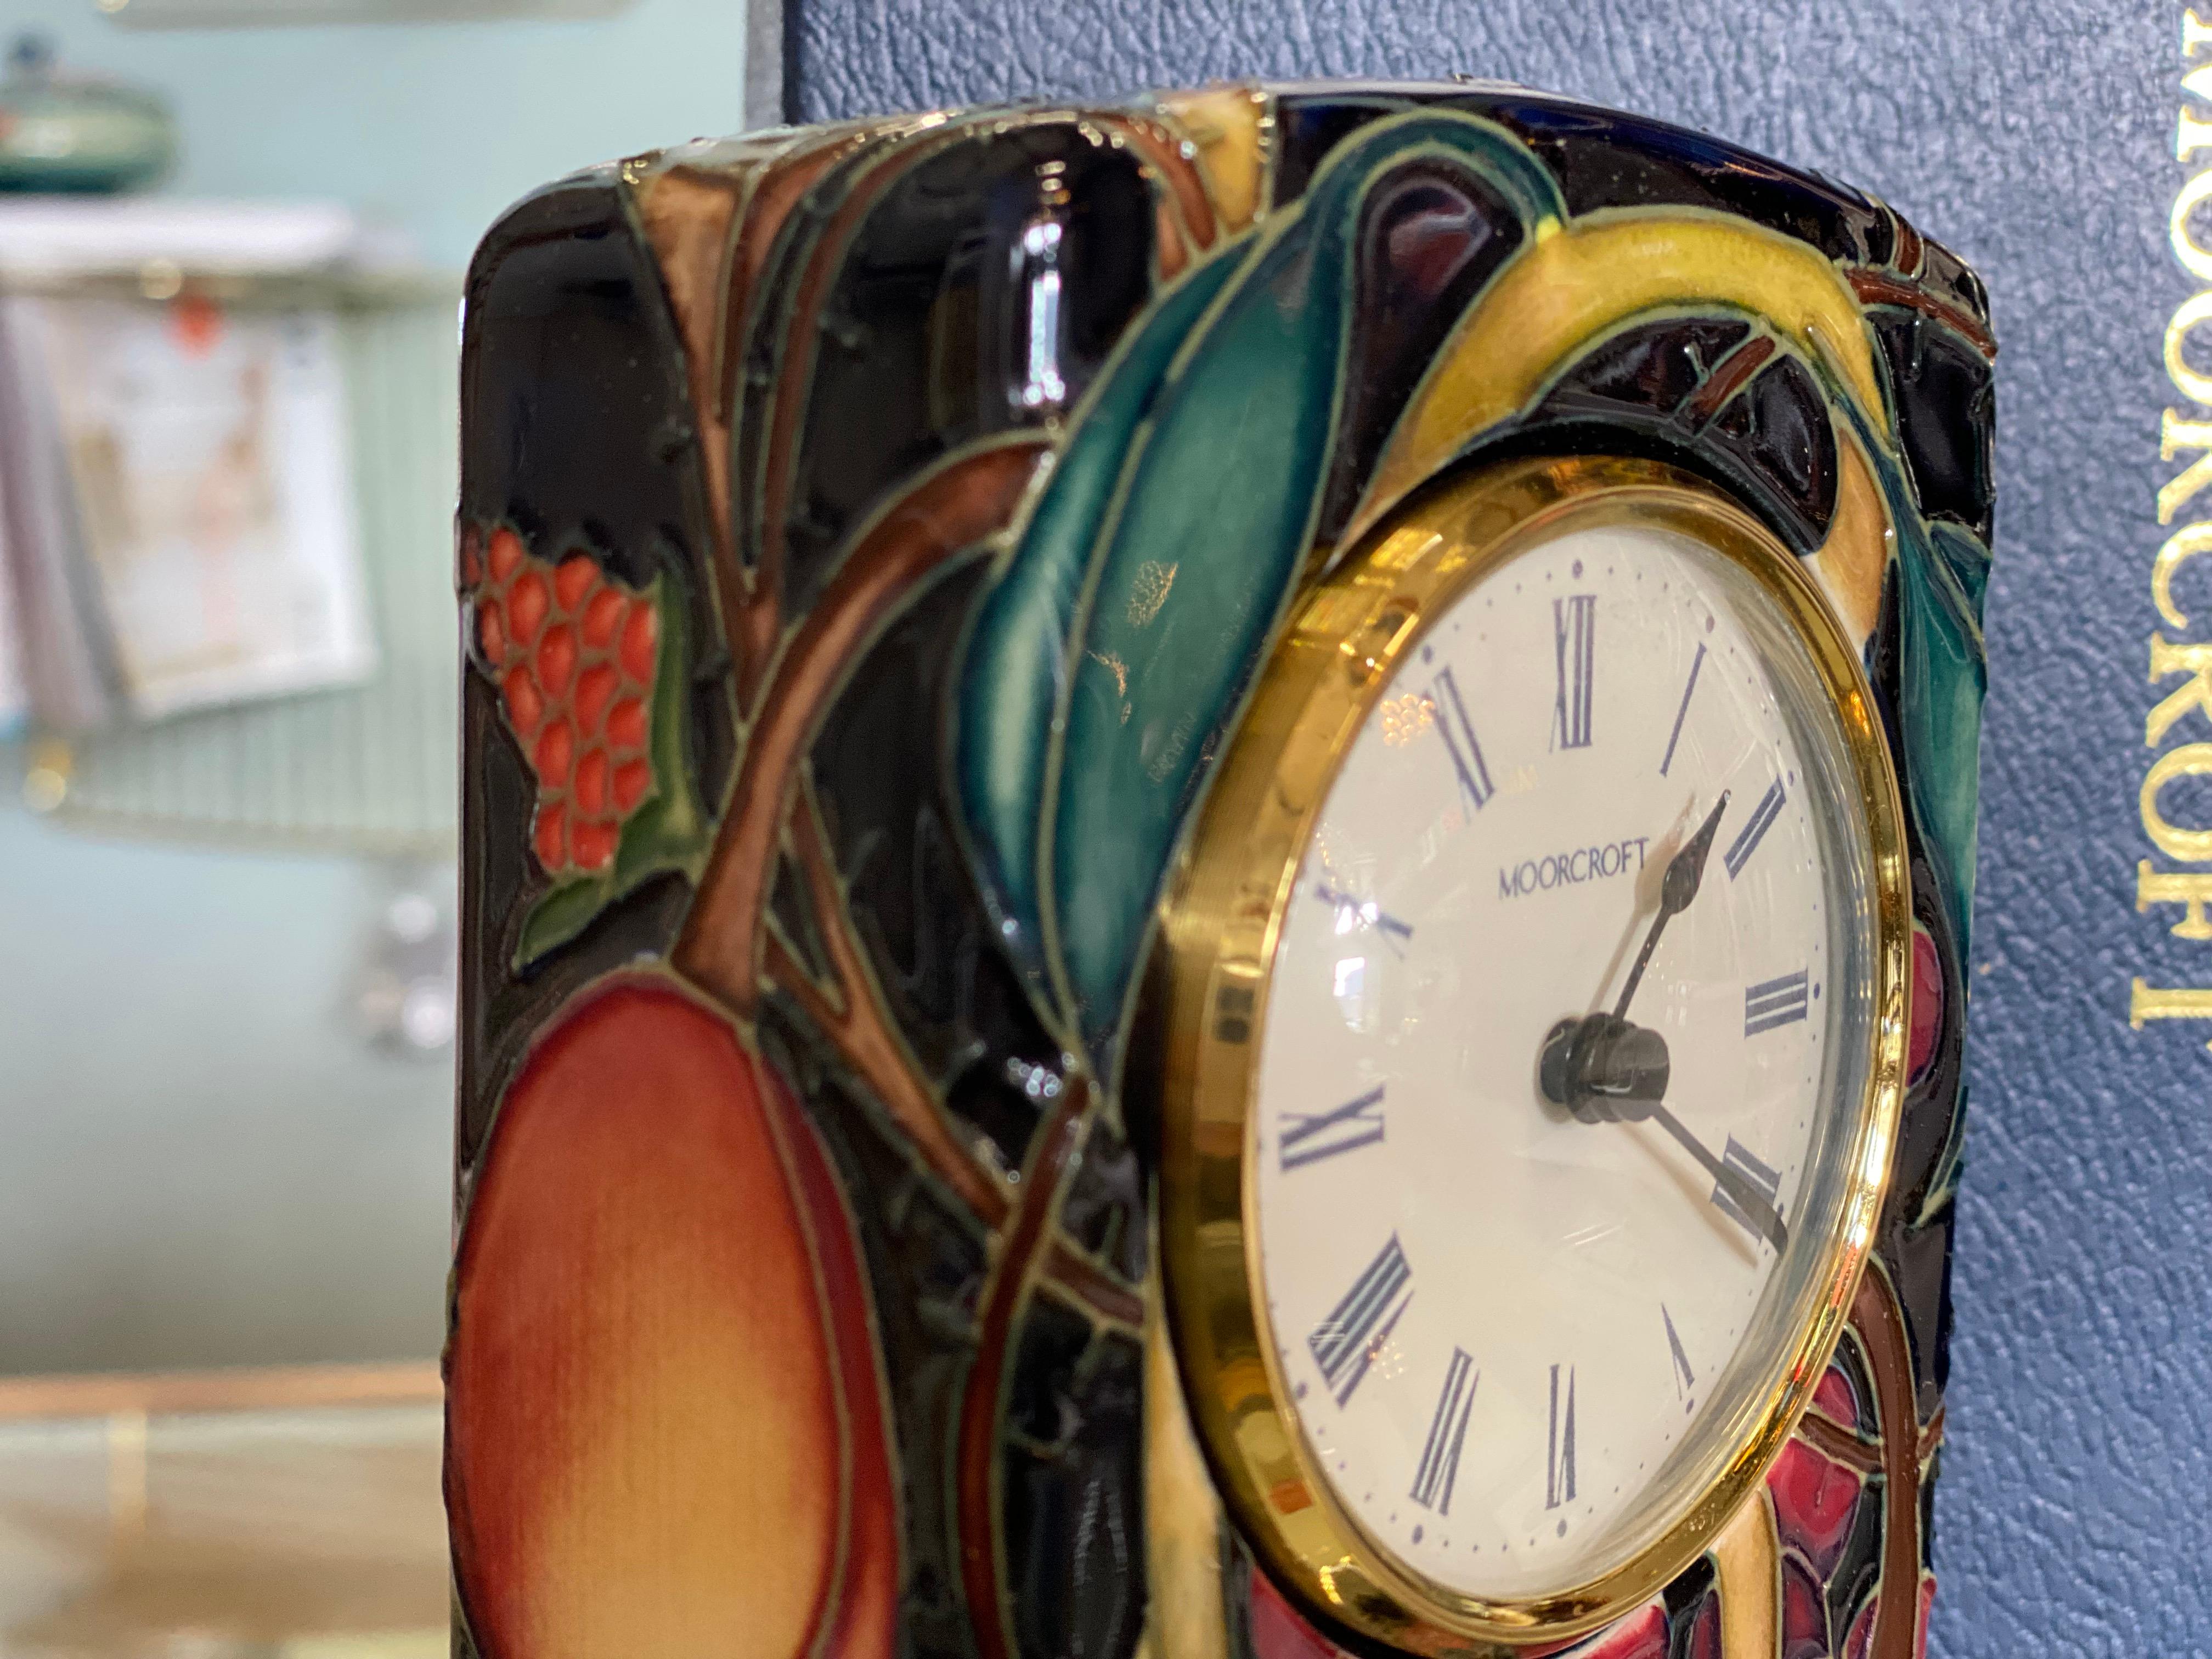 moorcroft clocks for sale